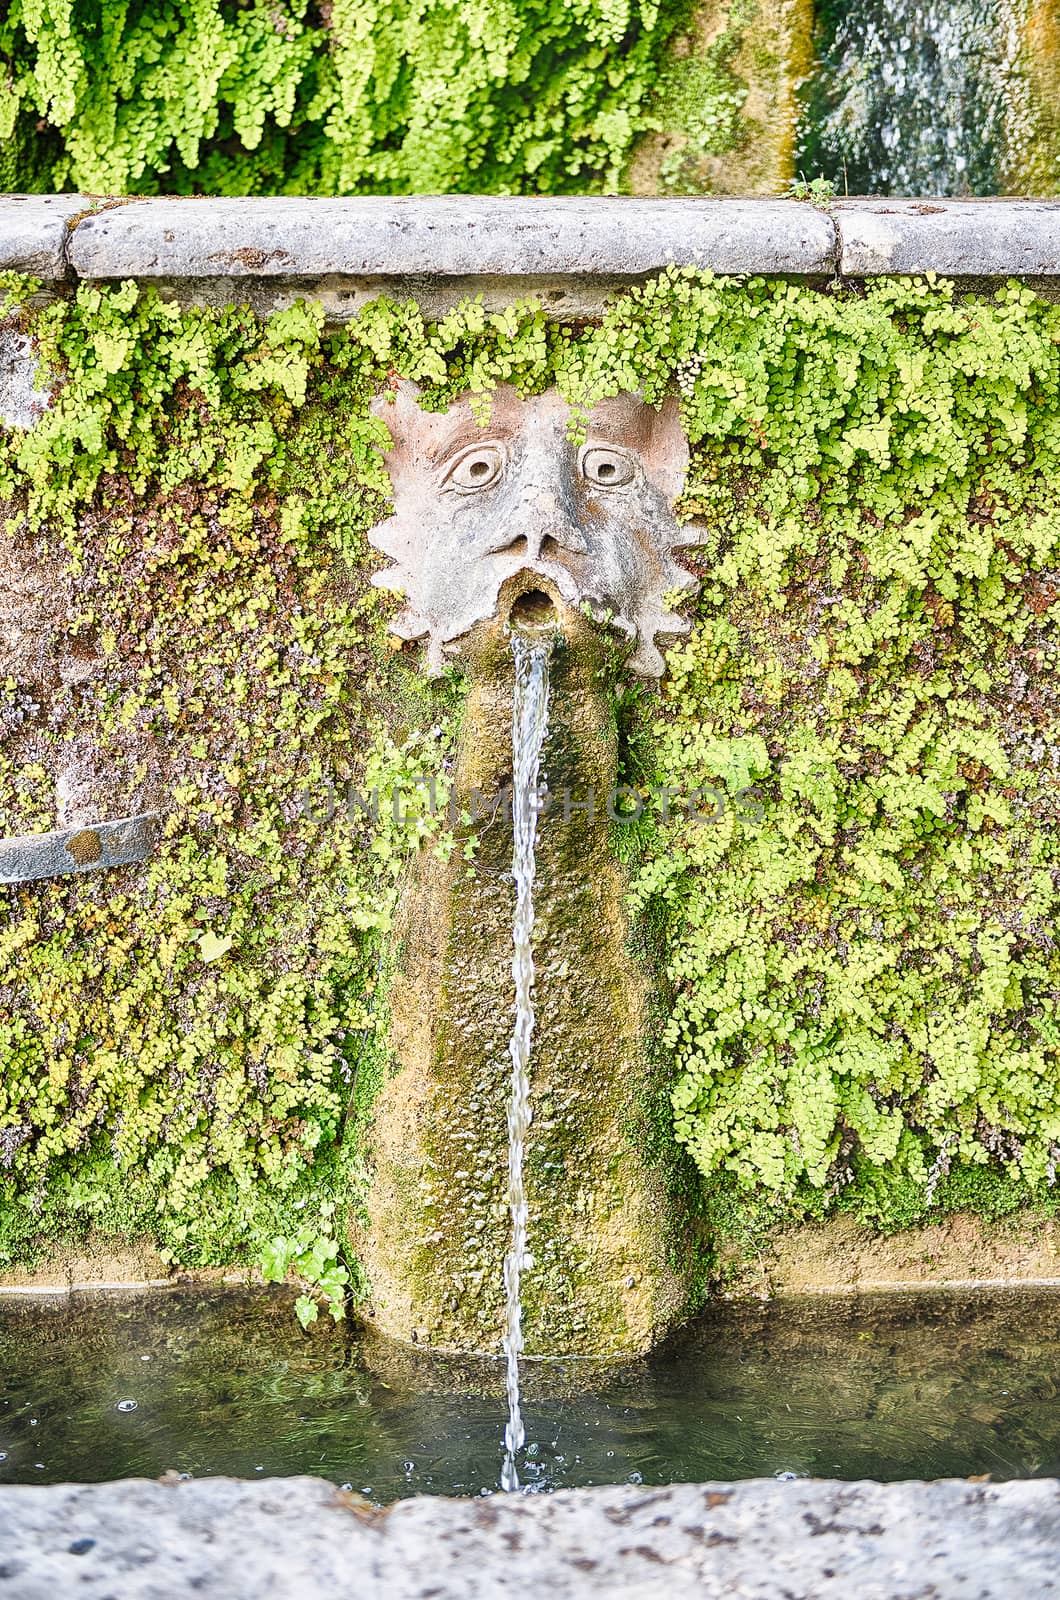 The hundred fountains, iconic spot in Villa d'Este, Tivoli, Italy